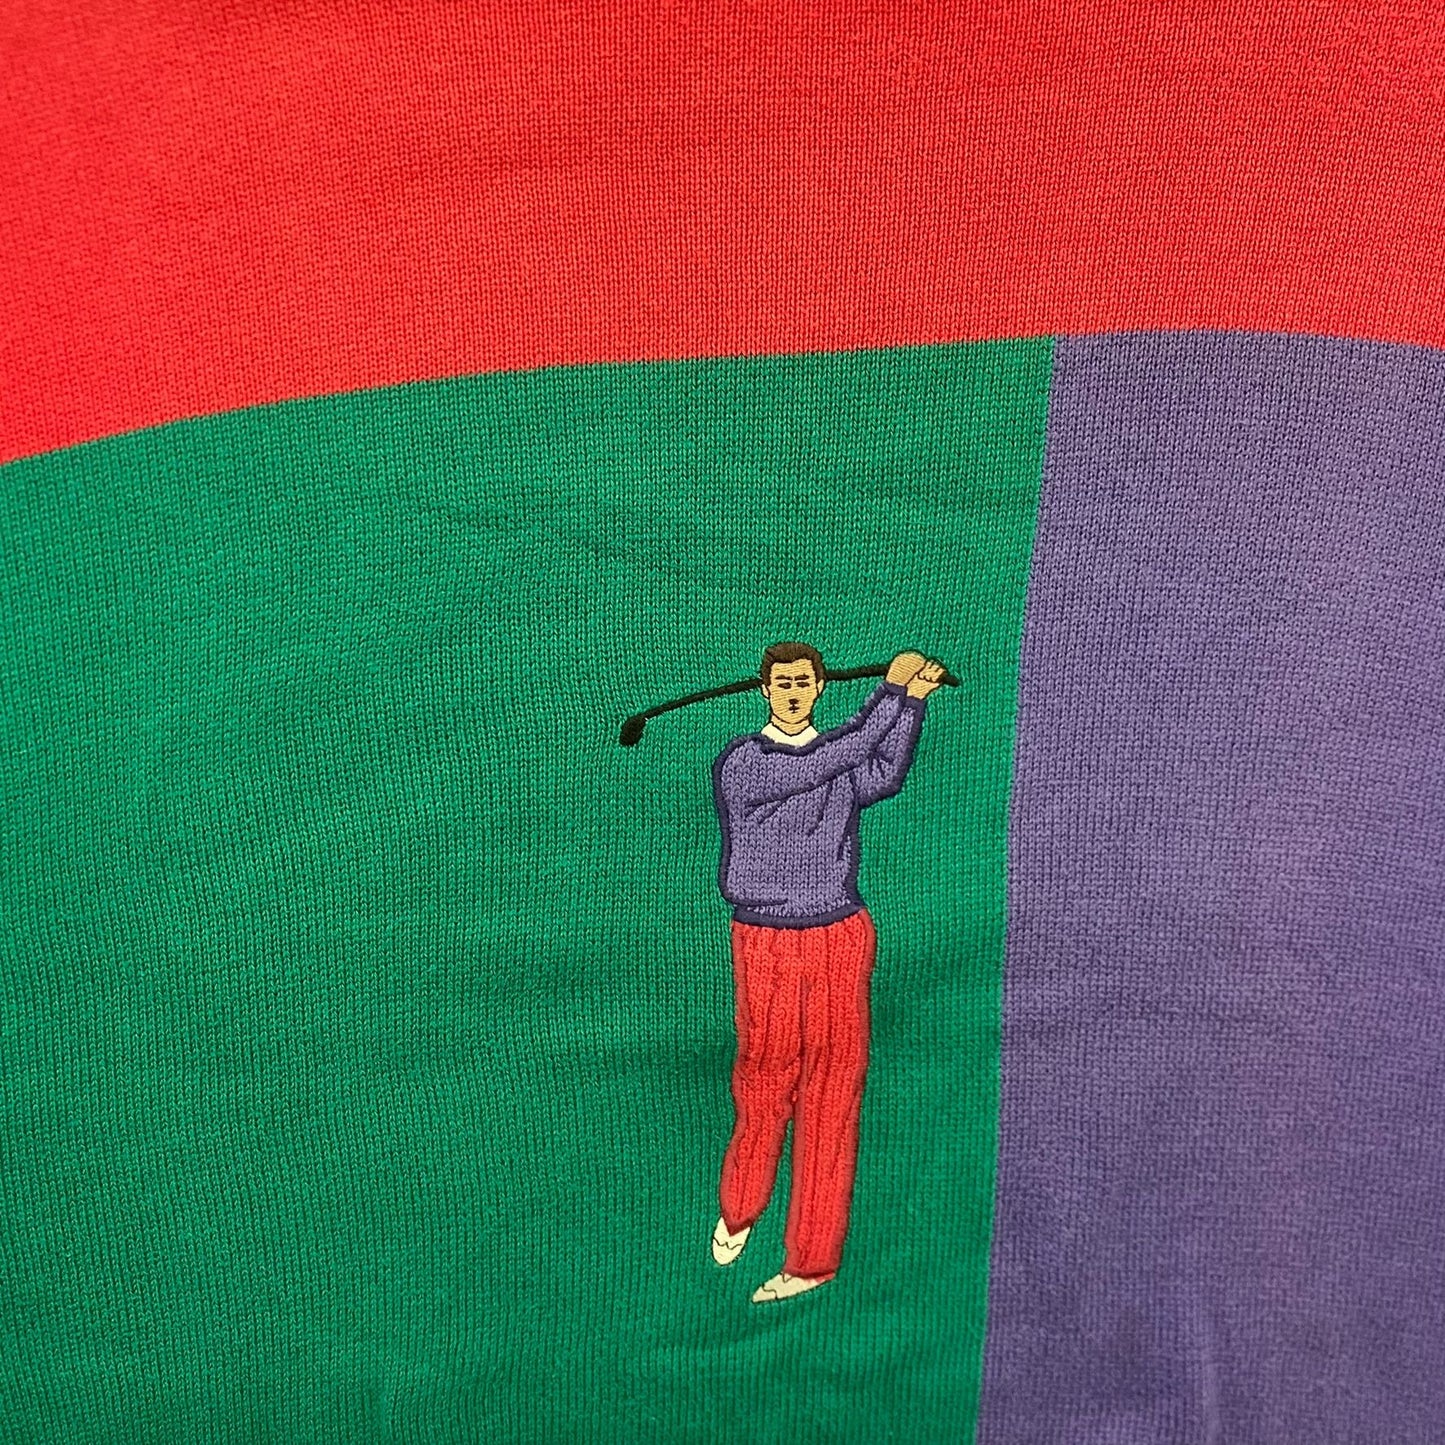 Vintage 80s Golf Color Block Preppy Knit Crewneck Sweater